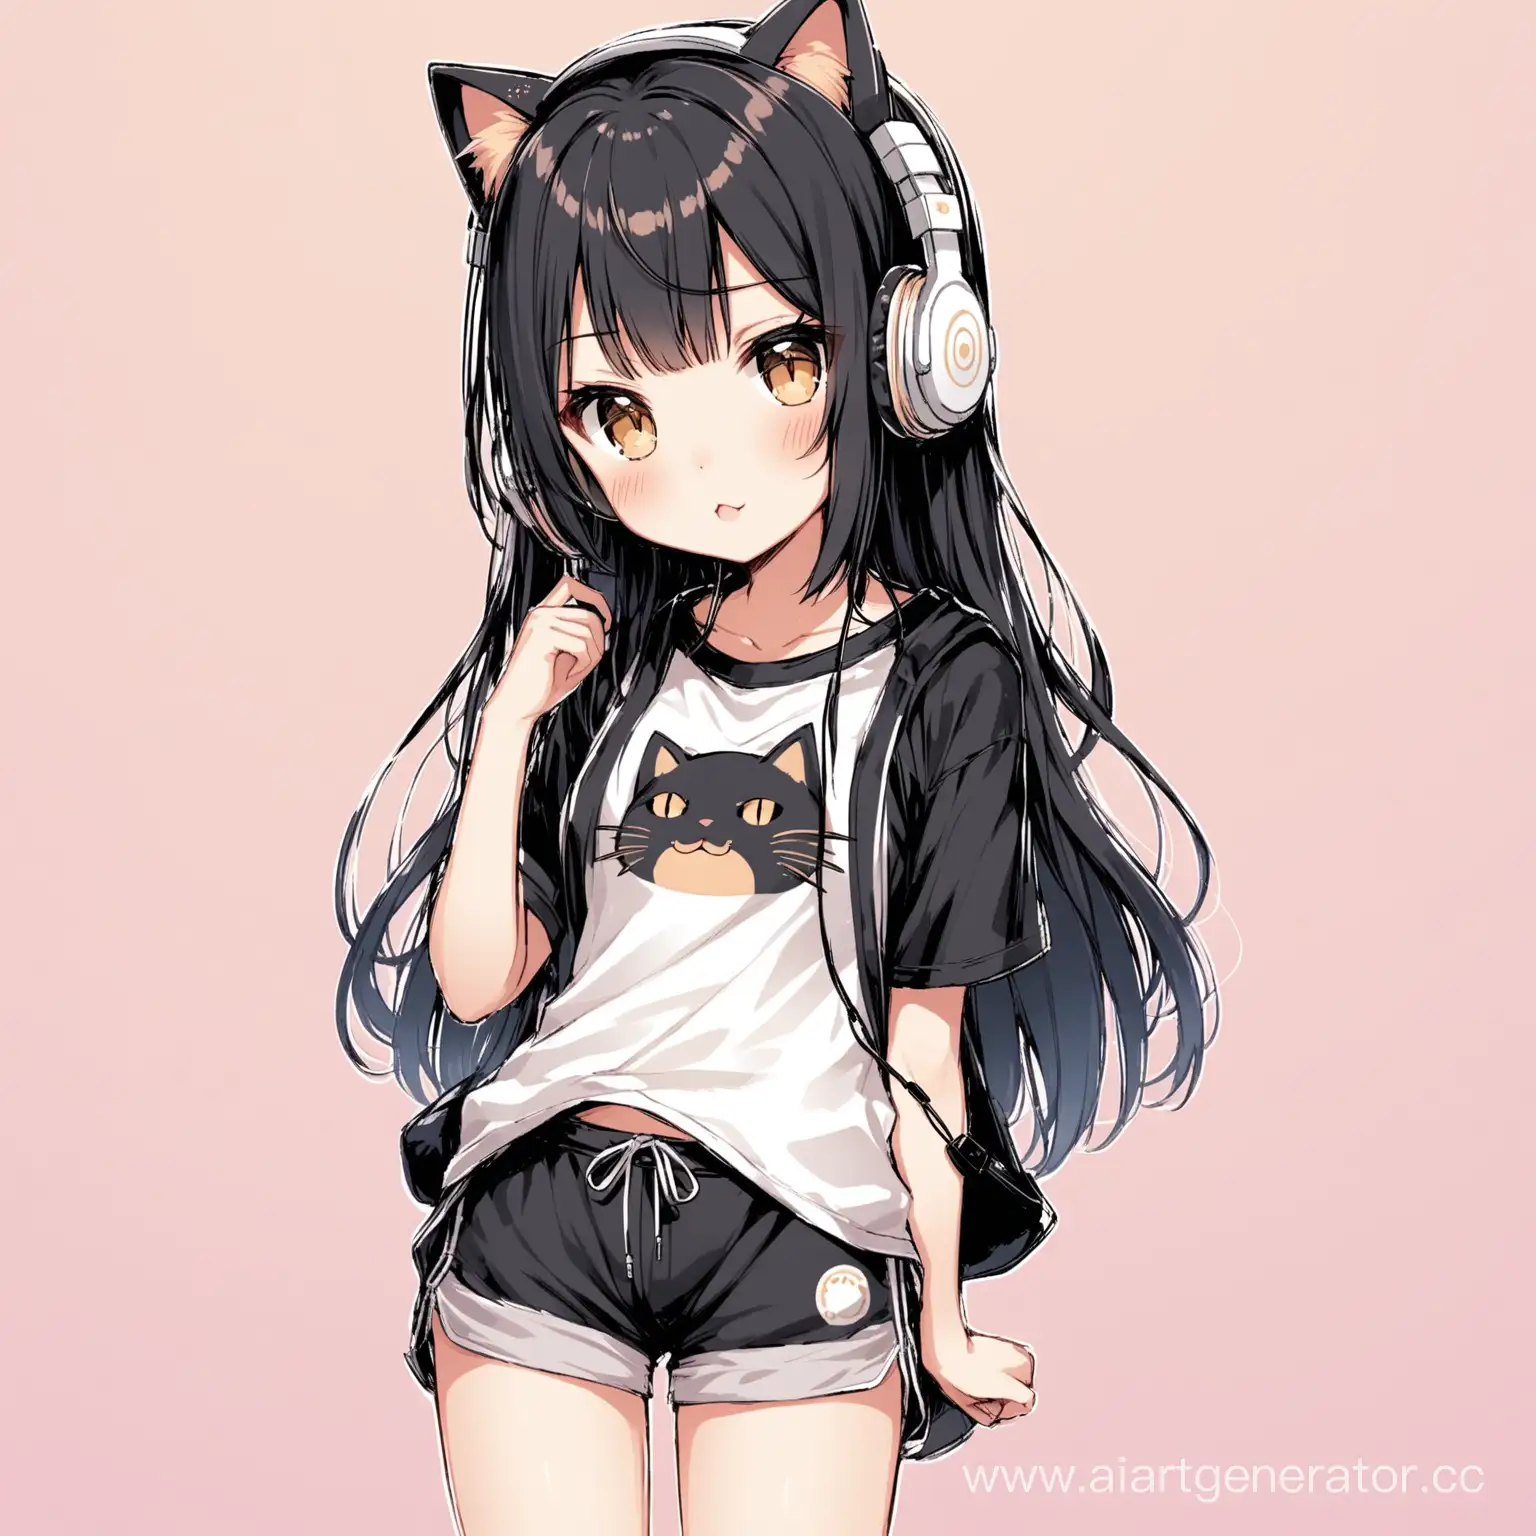 BlackHaired-Neko-Girl-Listening-to-Music-in-Headphones-and-Shorts